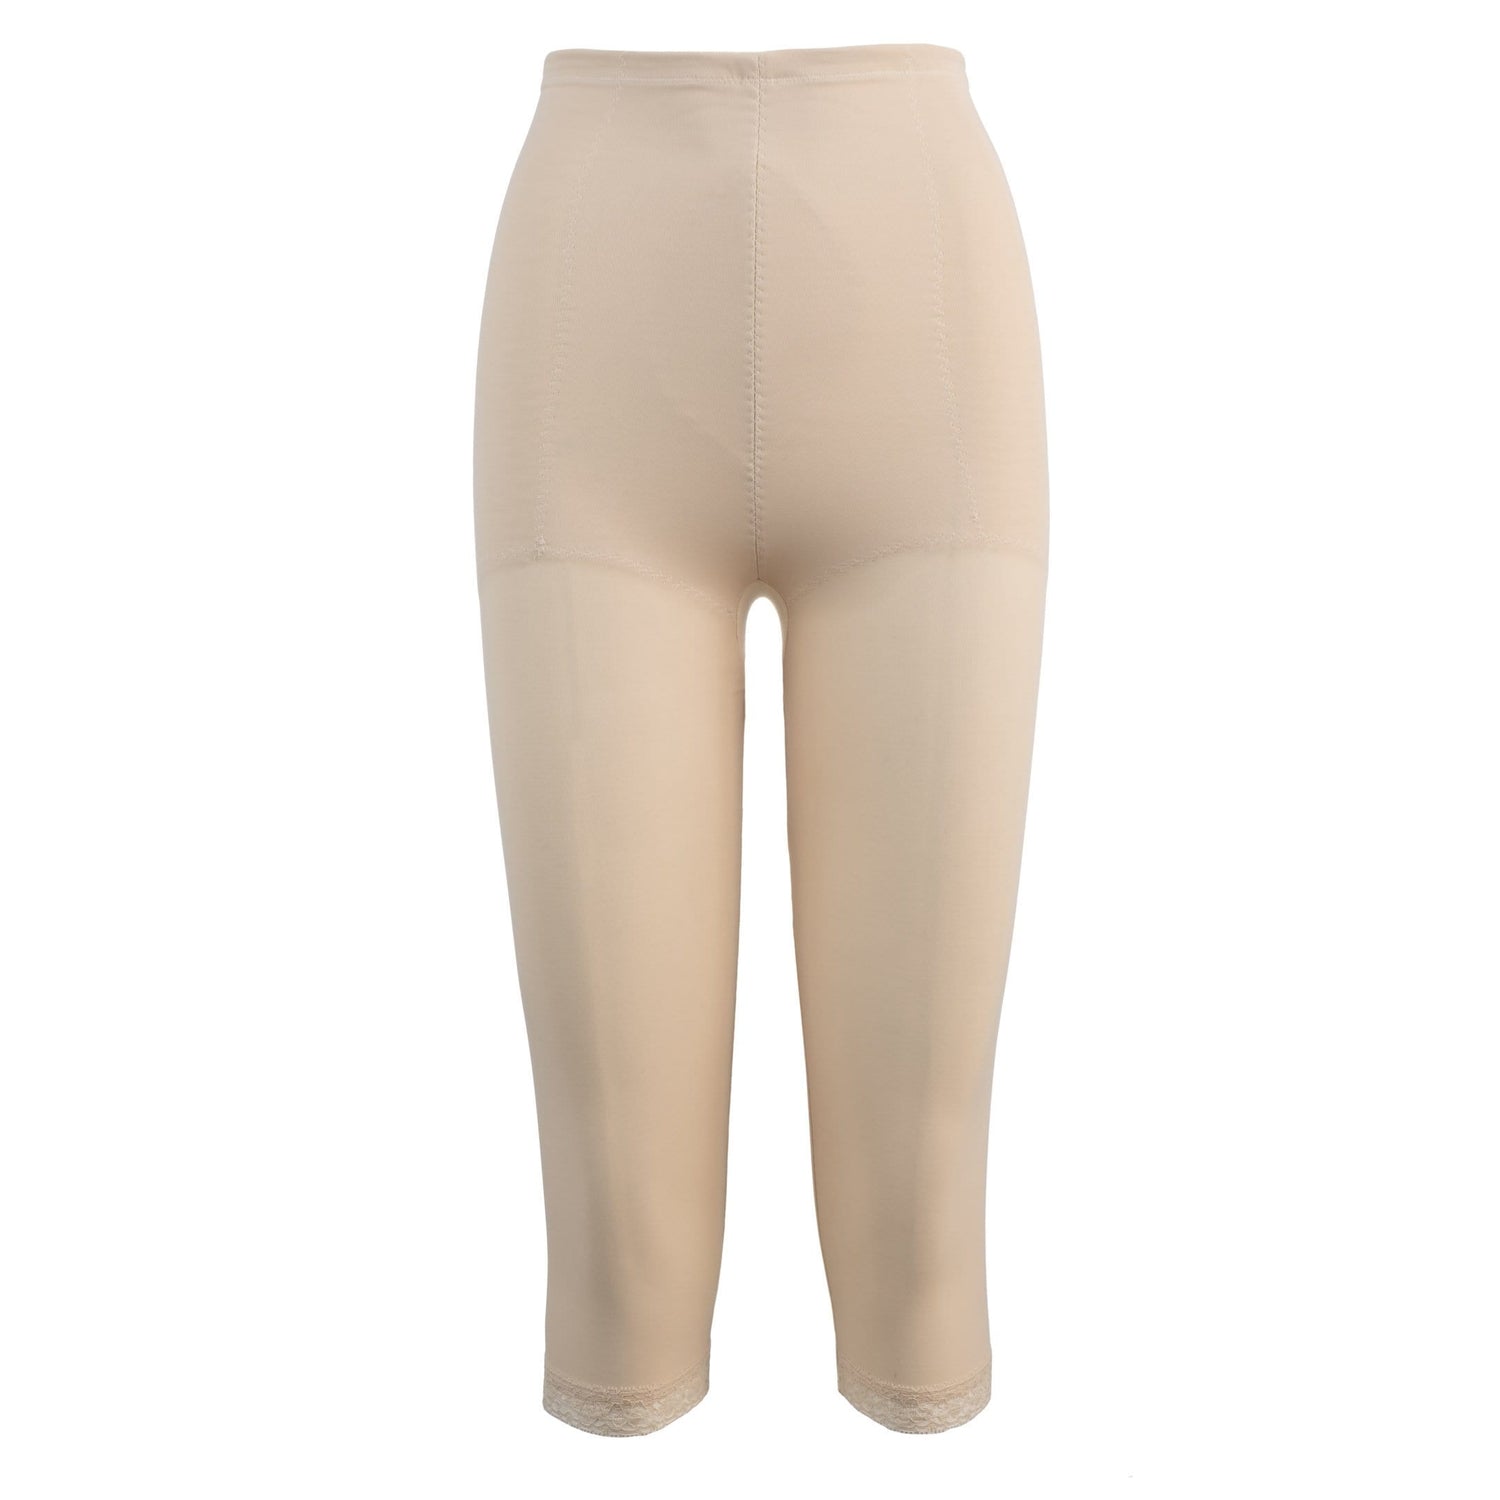 Cortland Style 7607 Ladies Firm Control Pants Liner - Cuff Top – Rago  Shapewear